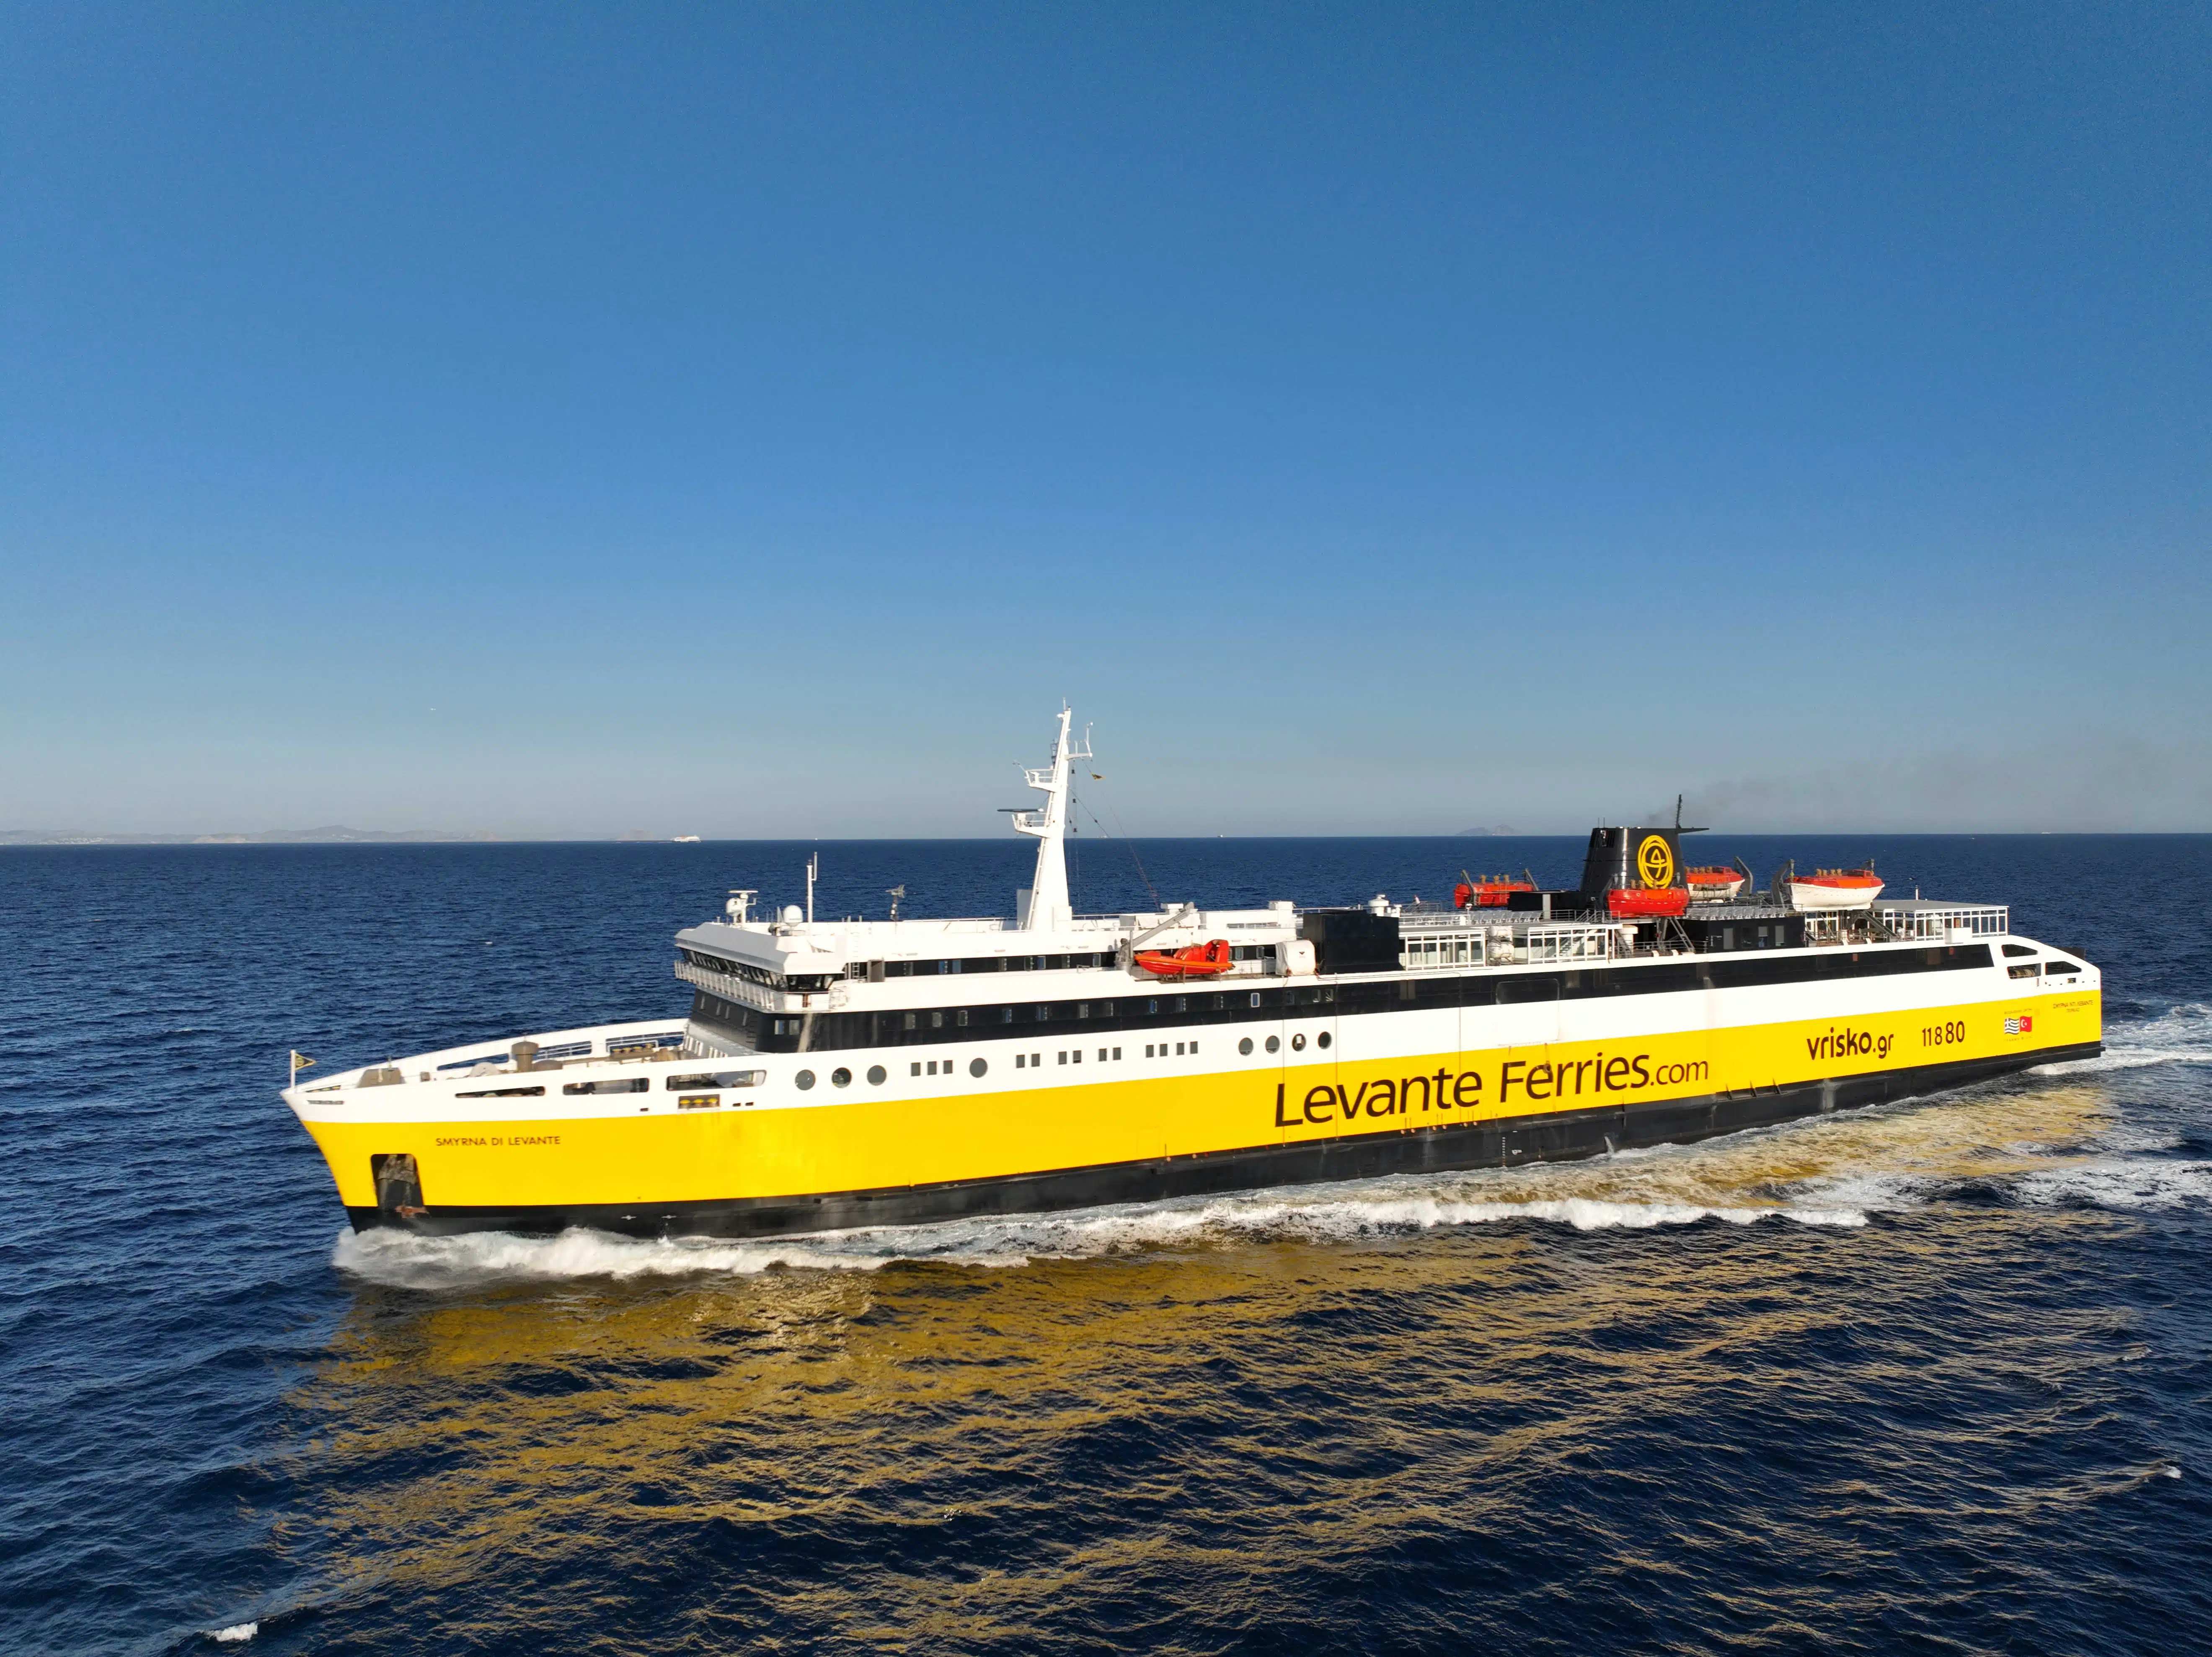 The Smyrna di Levante ferry travels from Thessaloniki to Izmir or Smyrna